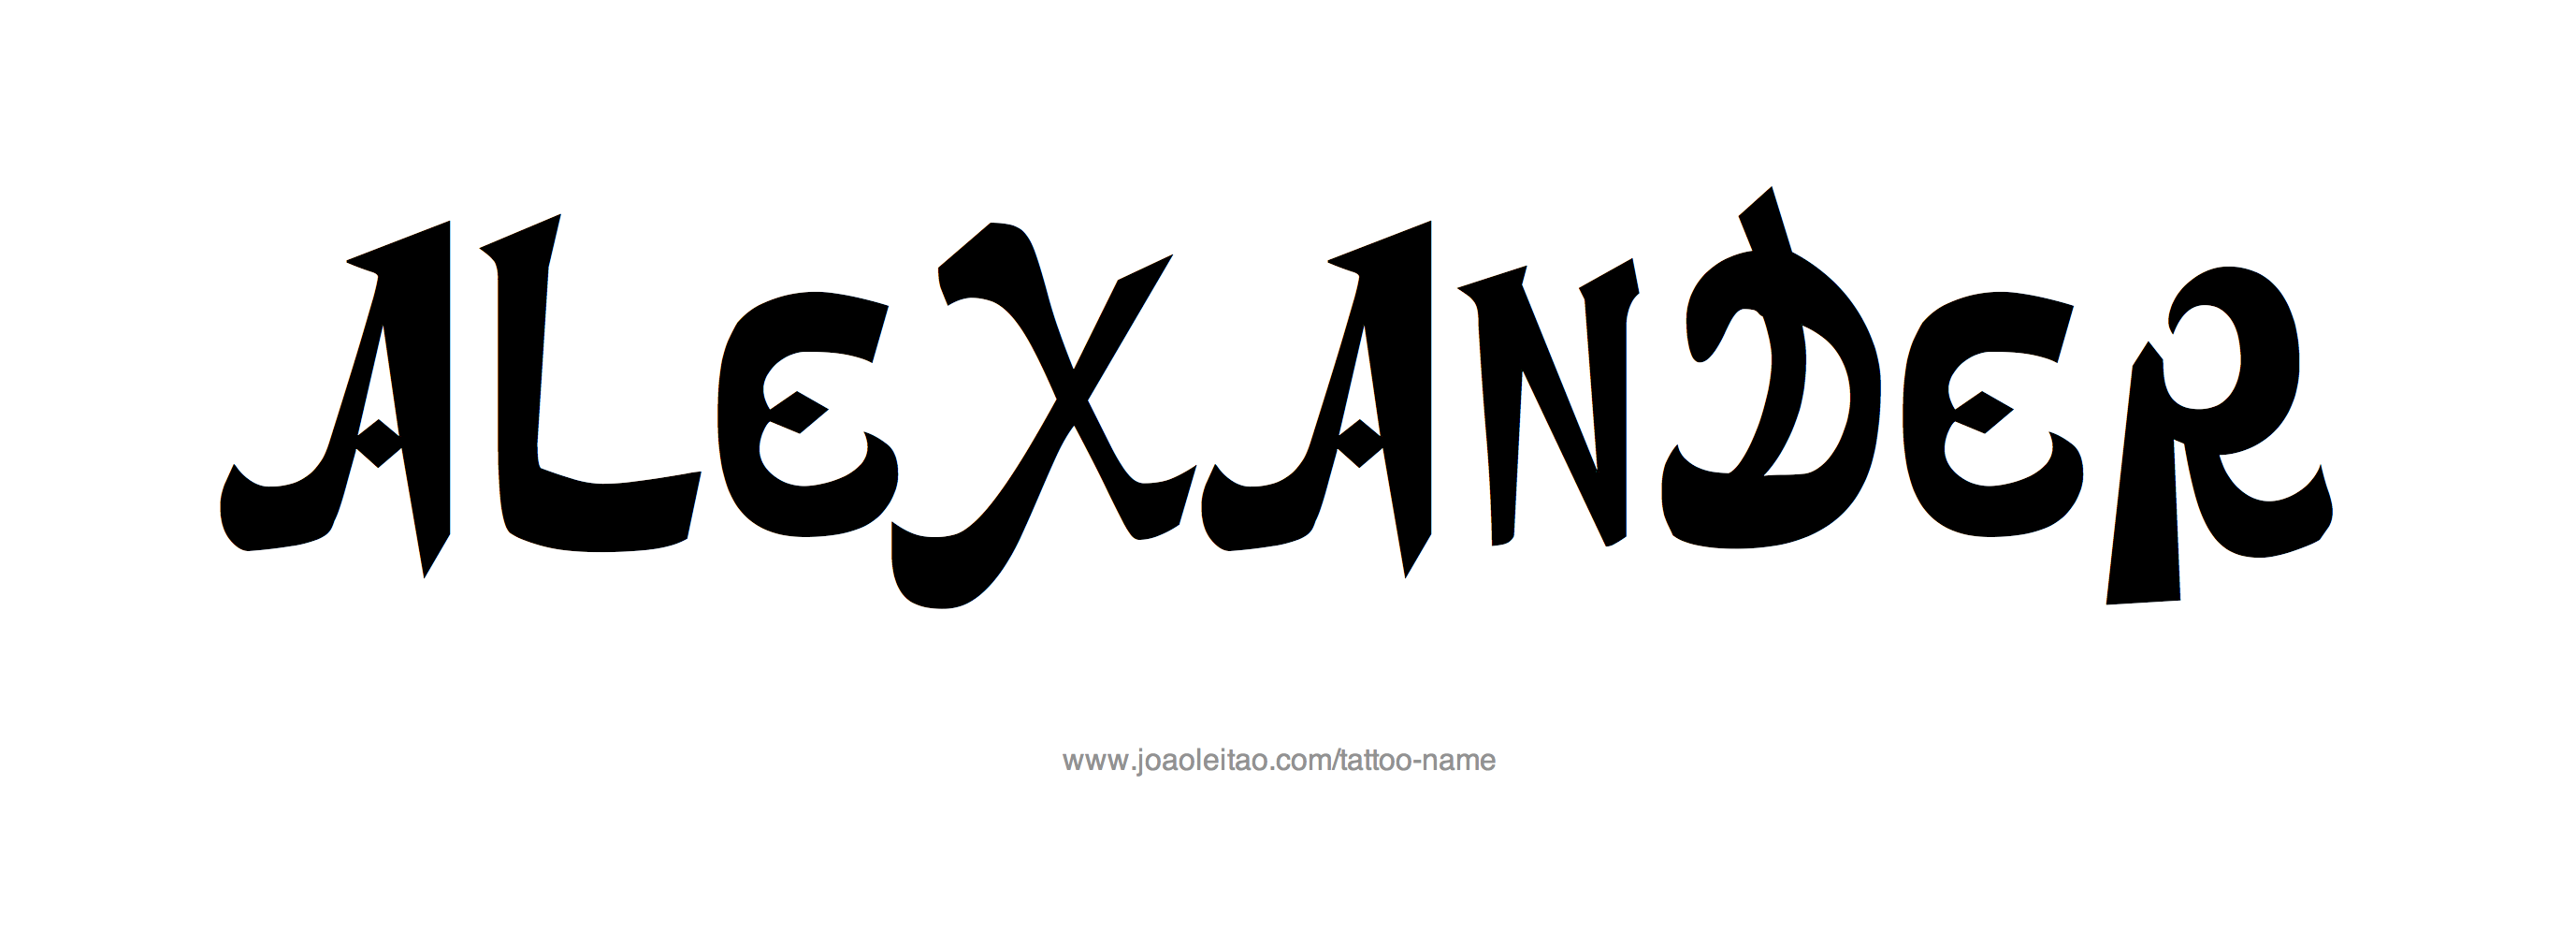 Имя Александр красивыми буквами